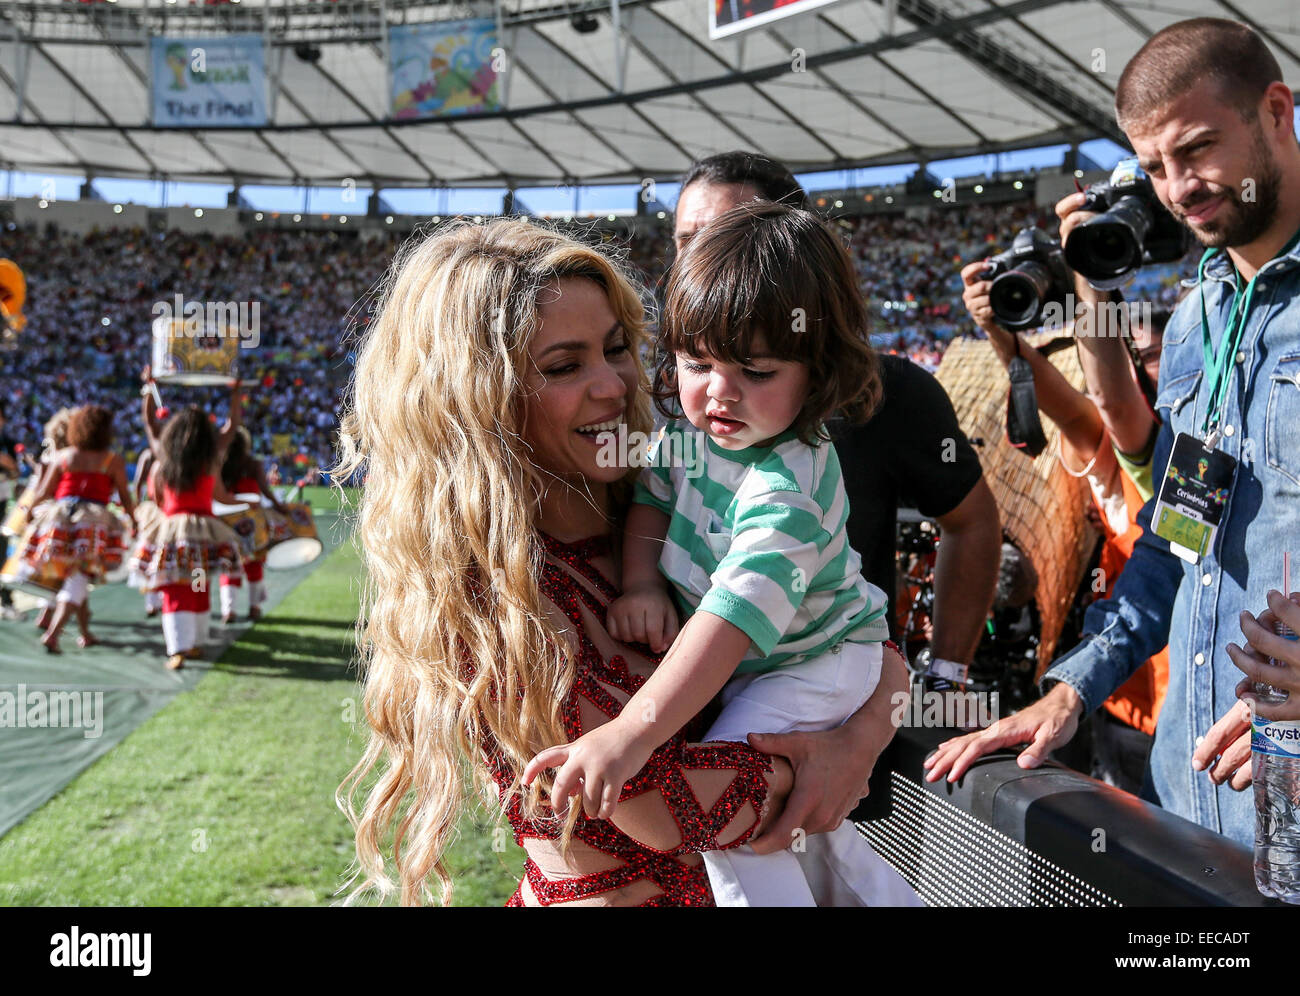 2014 FIFA World Cup - Closing Ceremony and Atmosphere - Maracana Stadium (Estadio Maracana)  Featuring: Shakira,Gerard Pique Where: Rio de Janeiro, Brazil When: 13 Jul 2014 Stock Photo